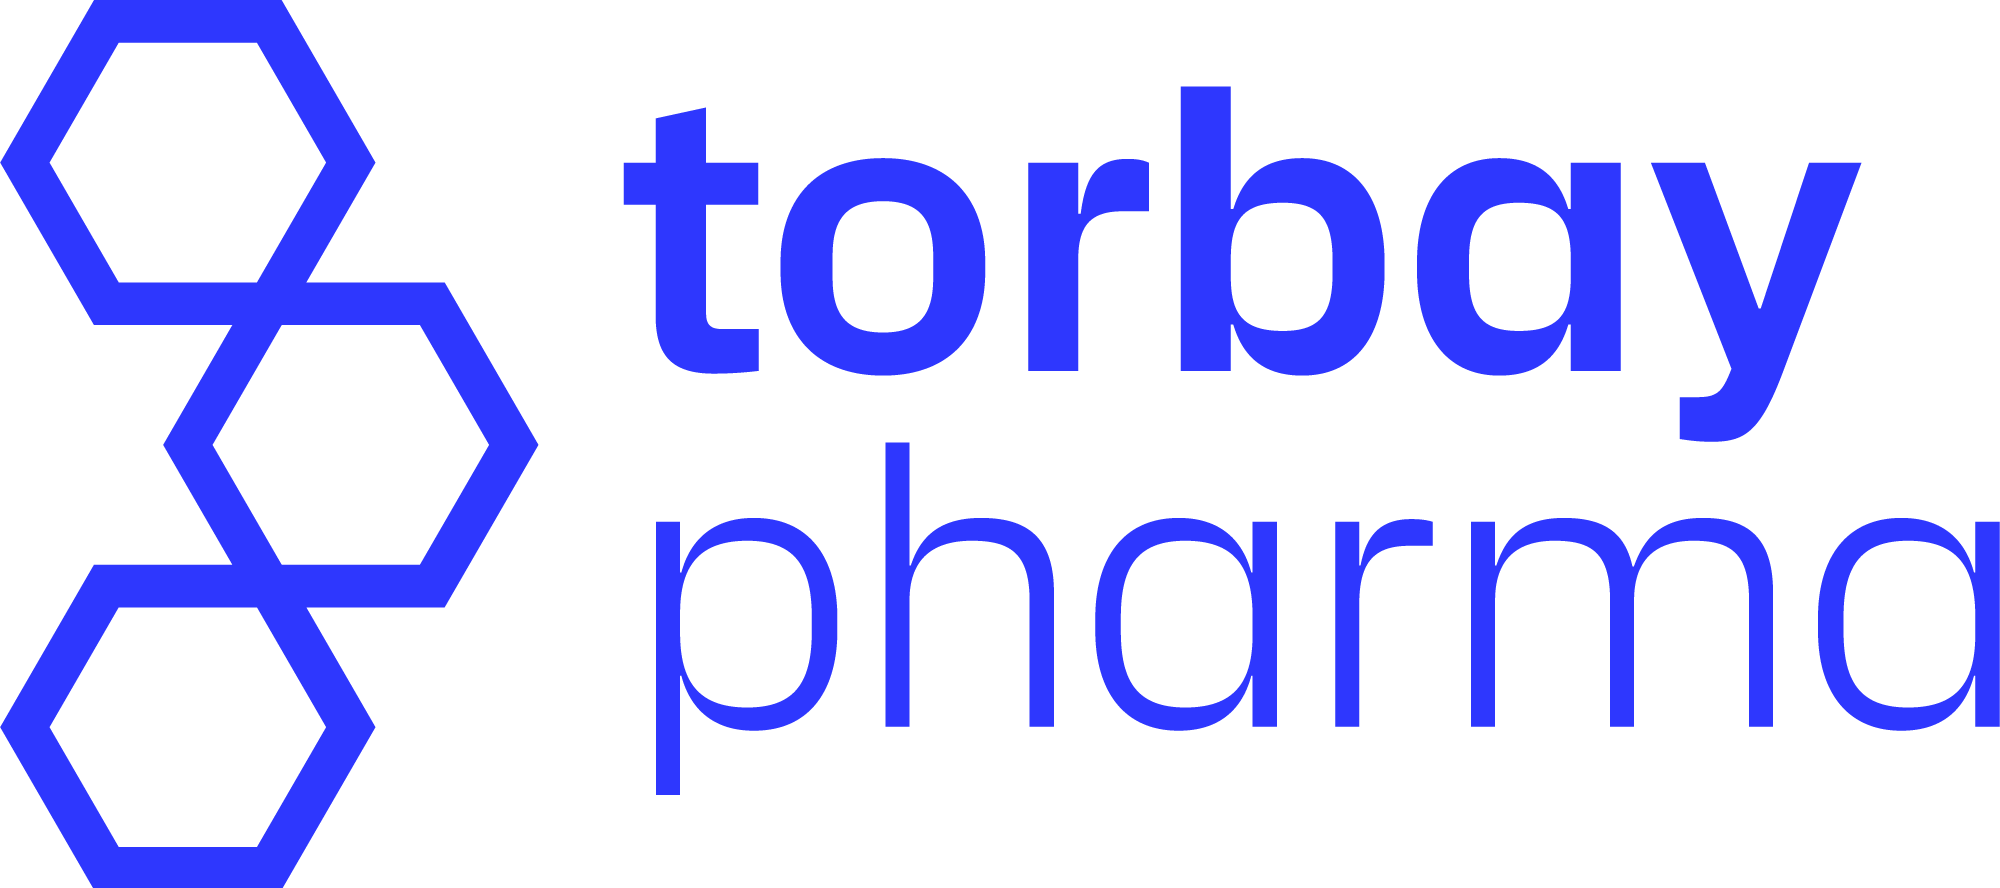 Torbay Pharmaceuticals